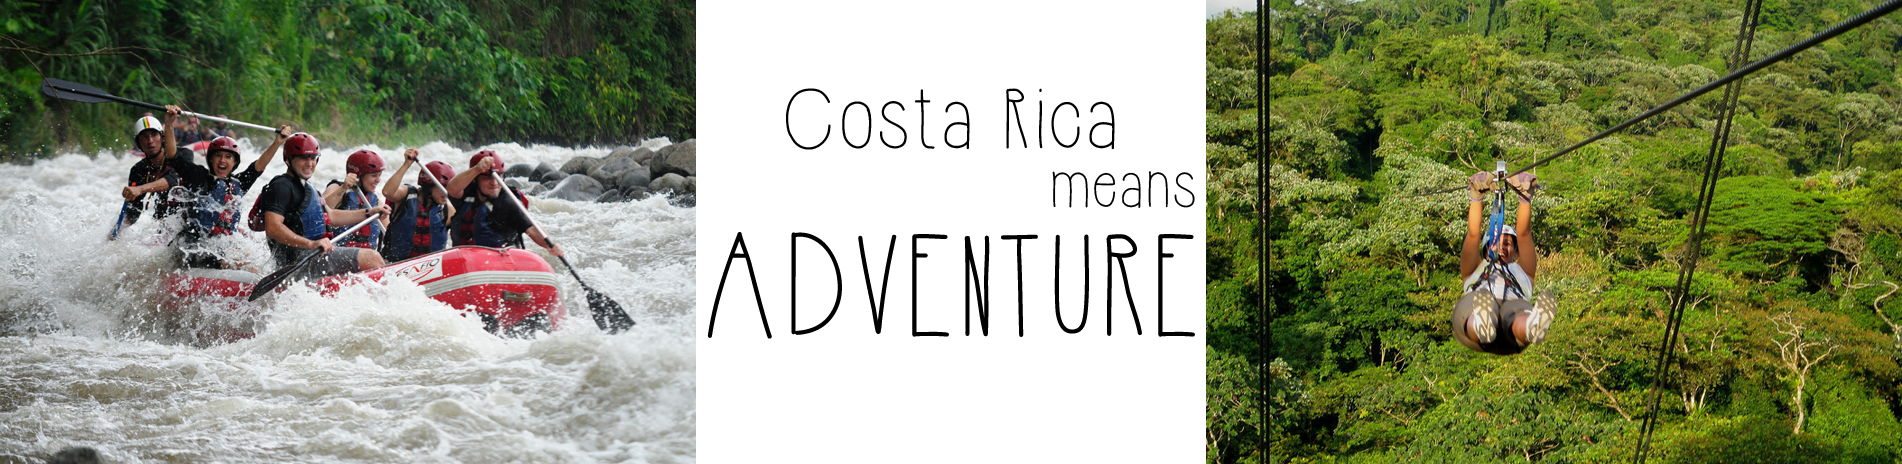 Costa Rica Adventure 2